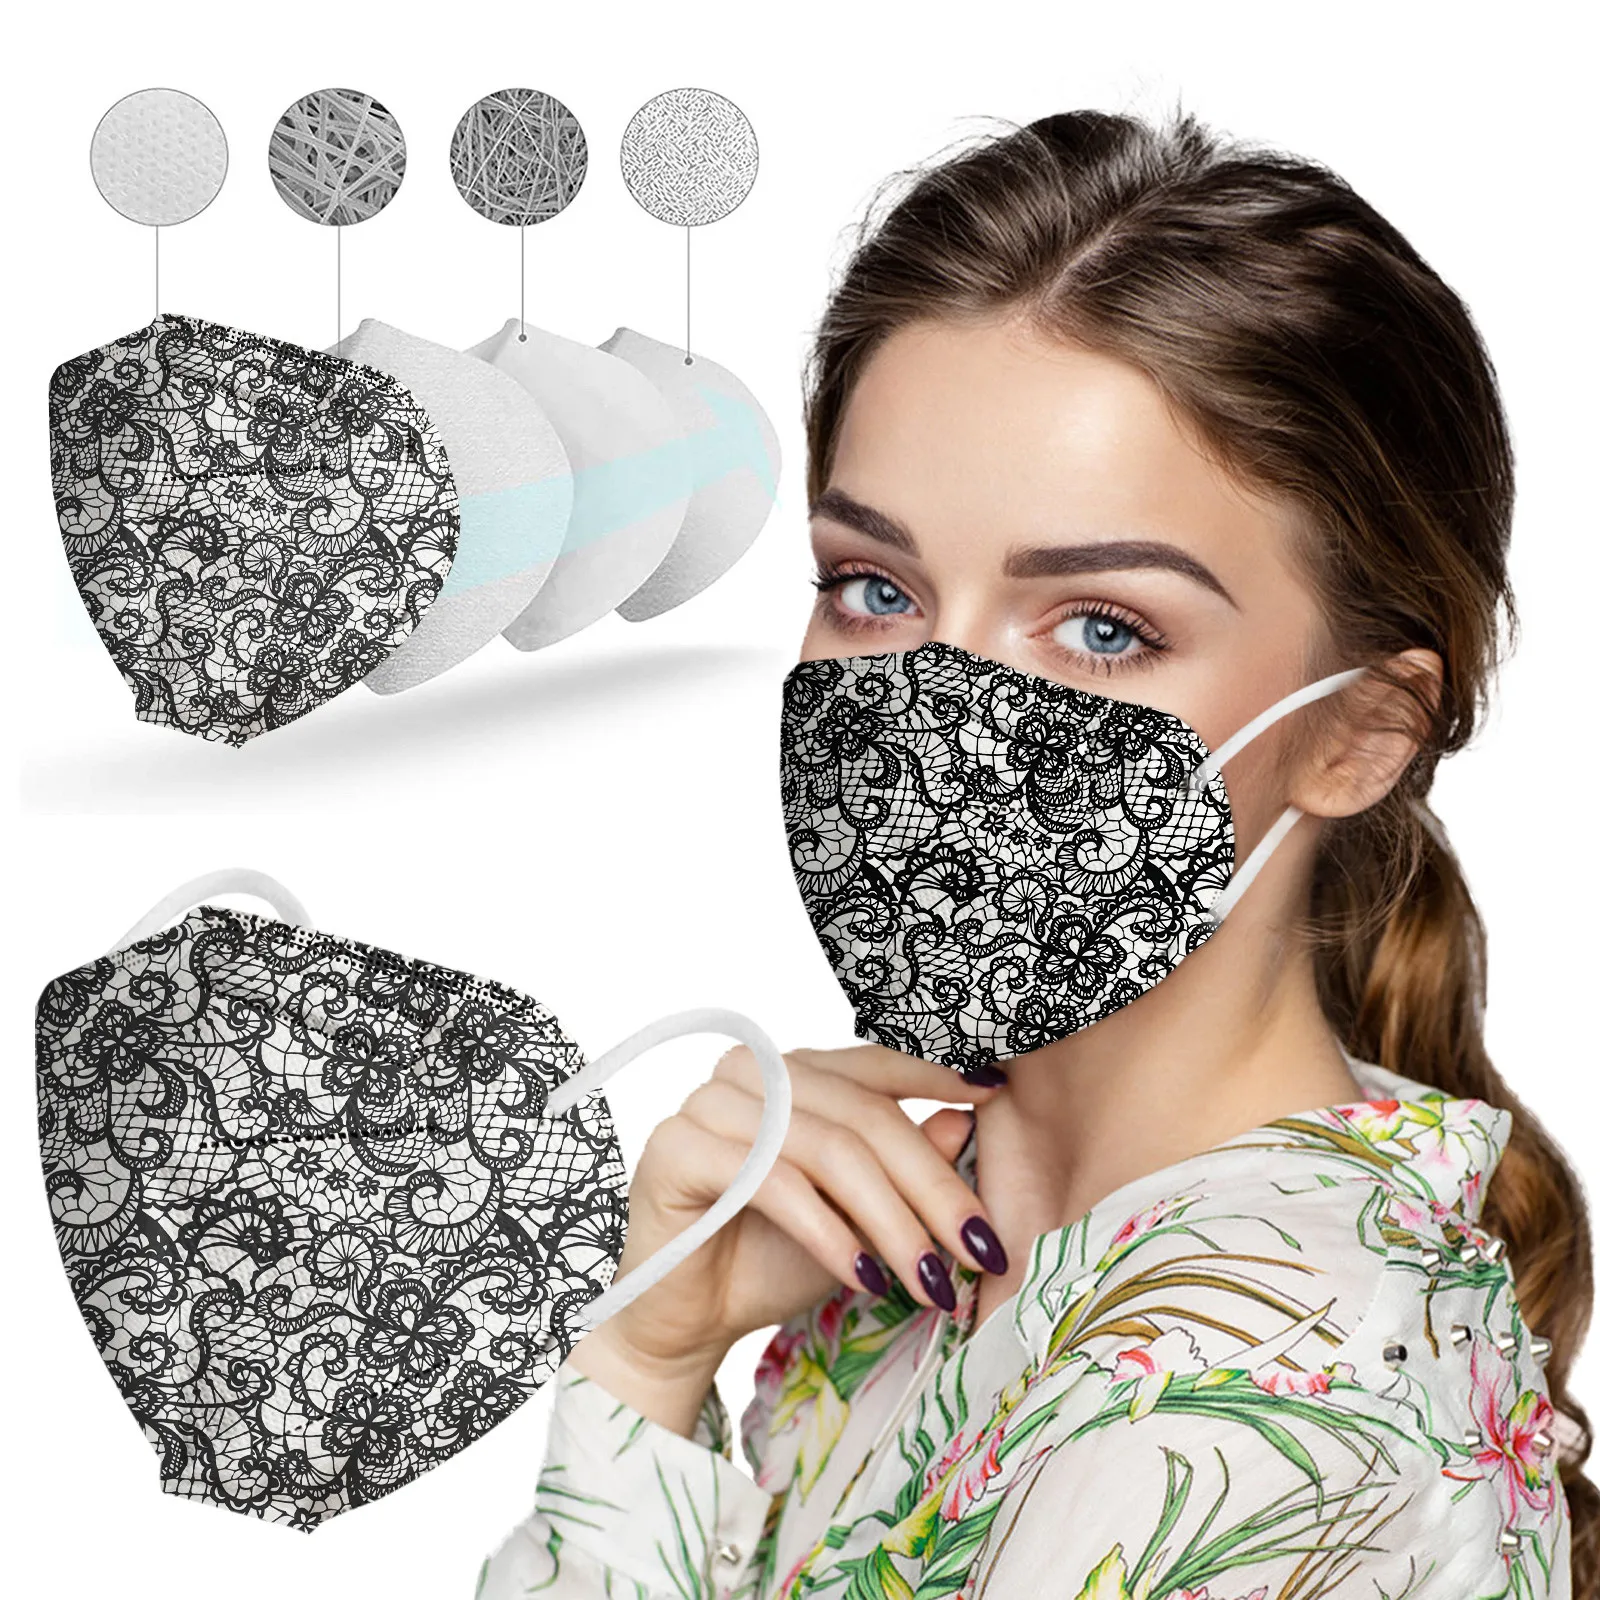 

50pc Fashion Print Fabric Face Masks For Women Girls Adjustable Reusable Protection Pm2.5 Dustproof Maske Ear Bandage Masque Fac